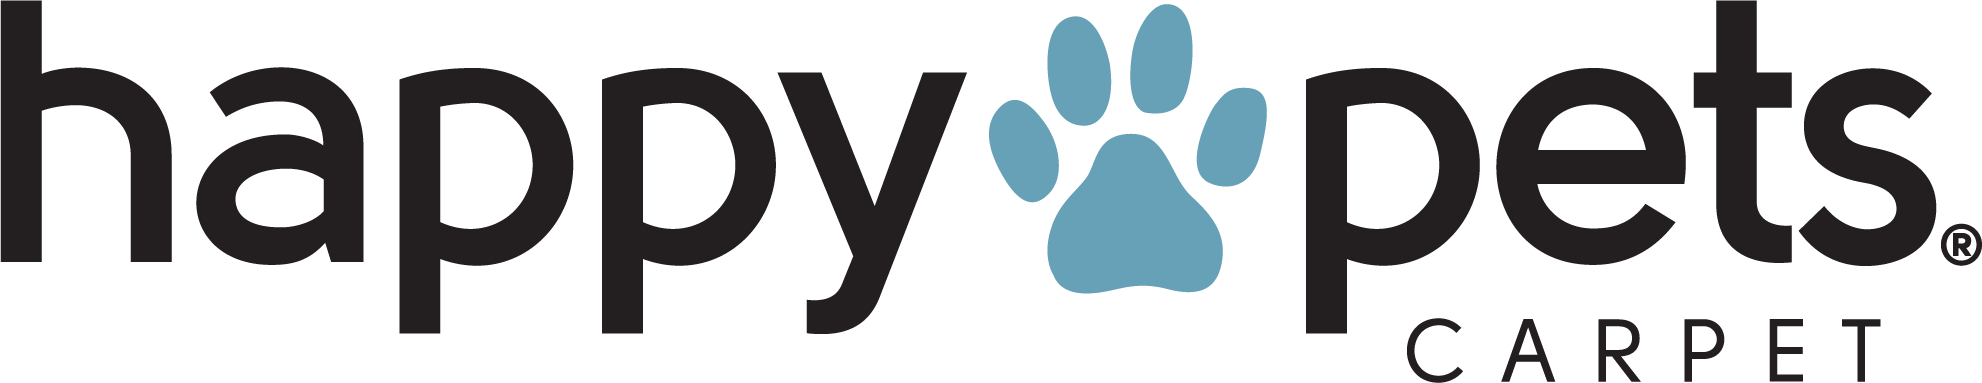 Pet Performance Happy Pets Logo | Carpetland USA Wisconsin